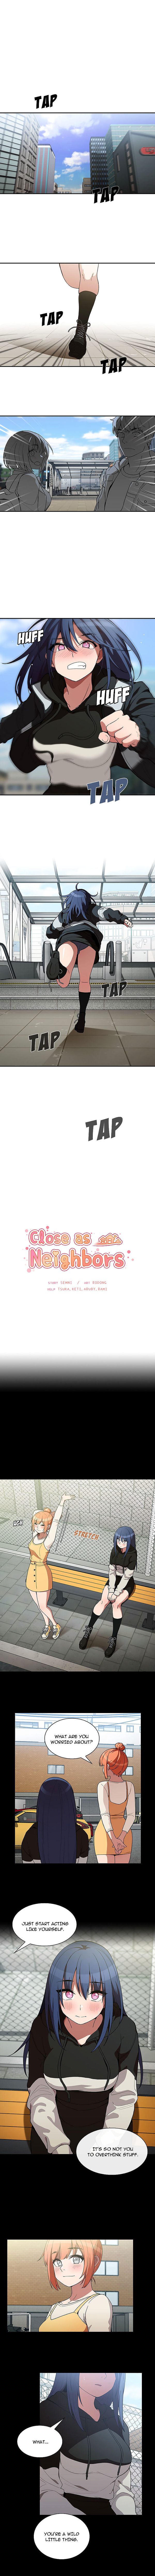 Close as Neighbors - part 14